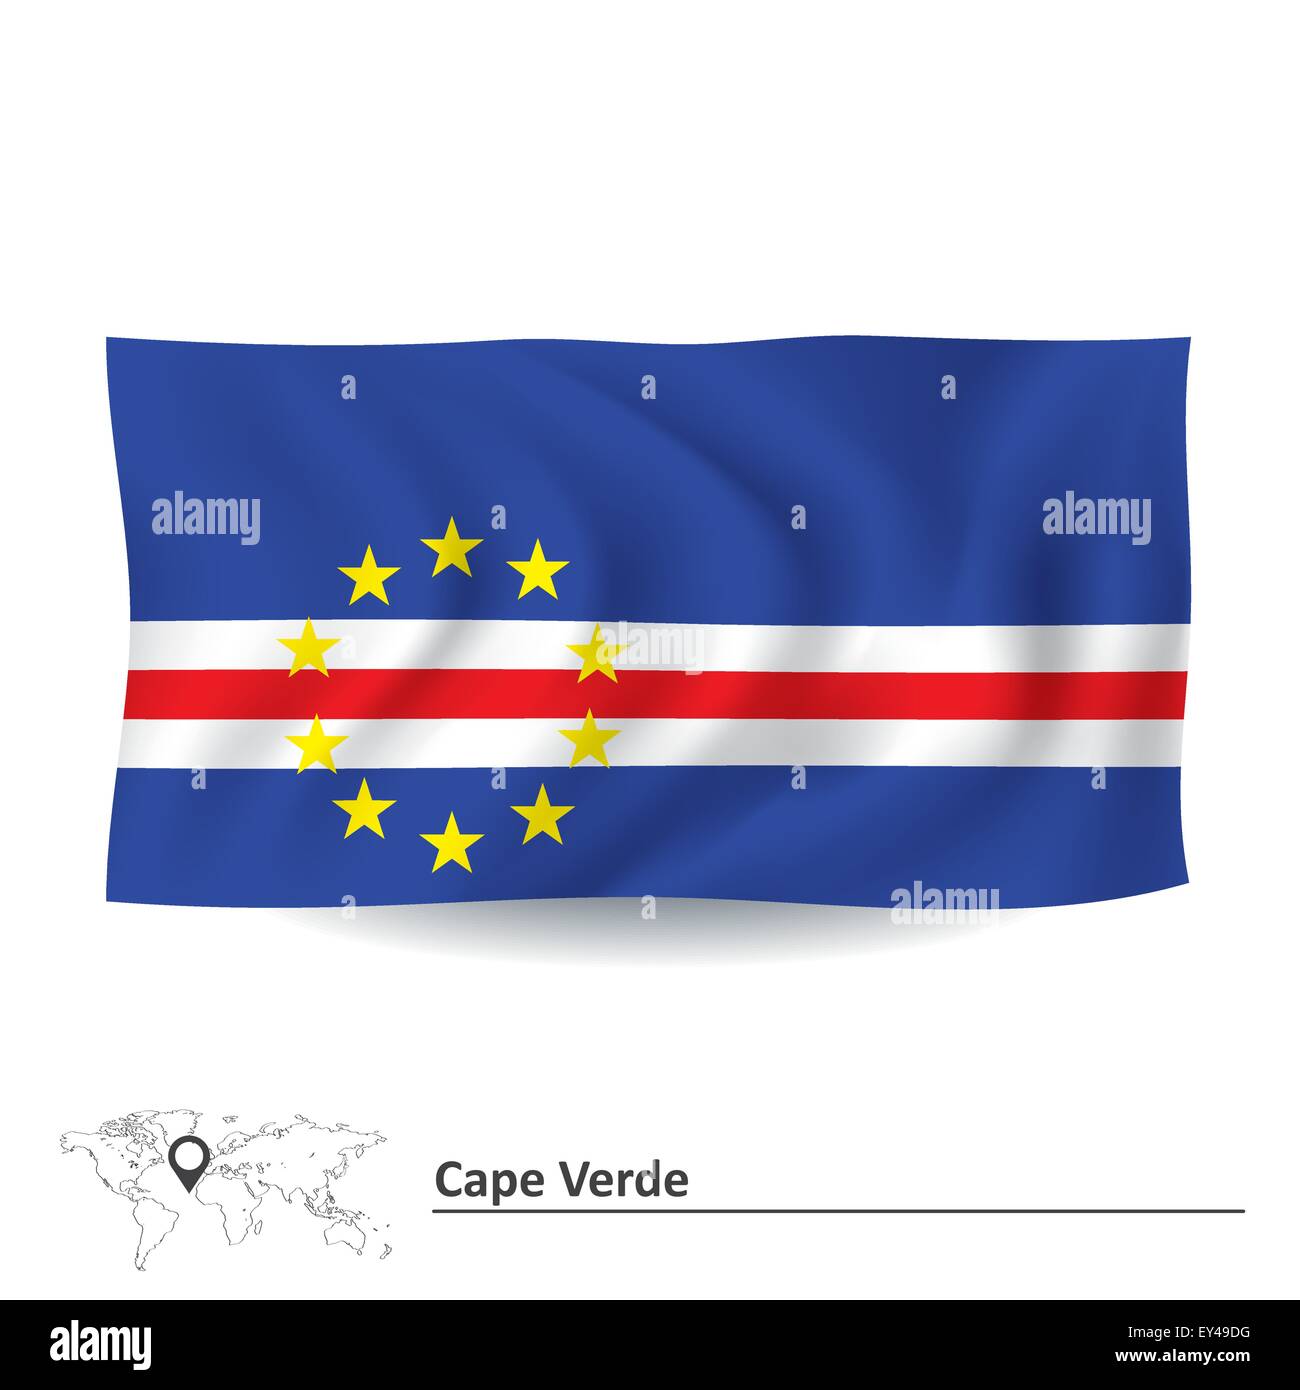 Flag of Cape Verde - vector illustration Stock Vector